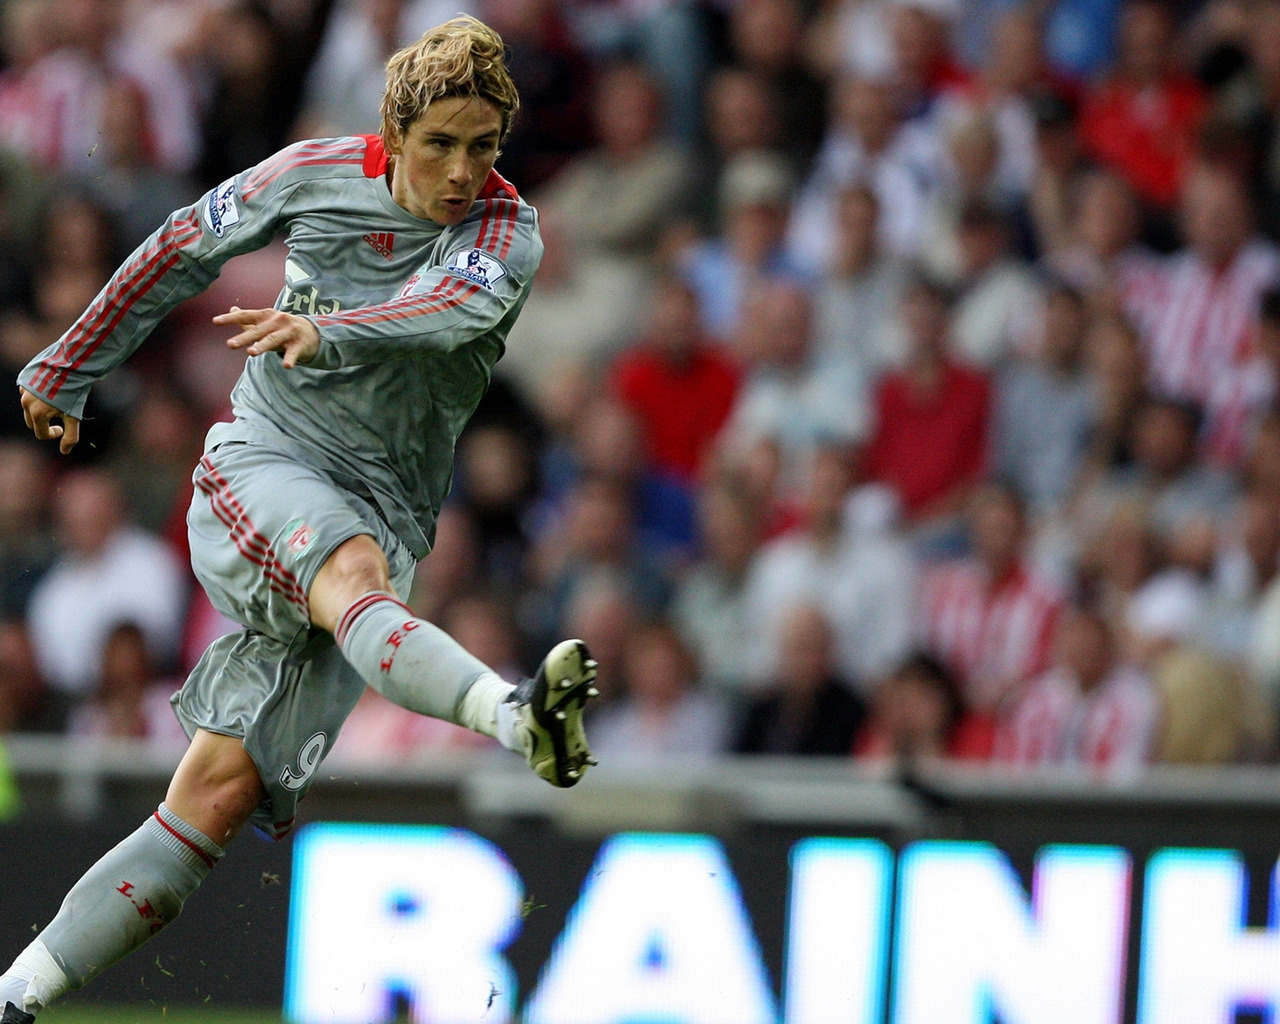 Fernando Torres Player for 1280 x 1024 resolution